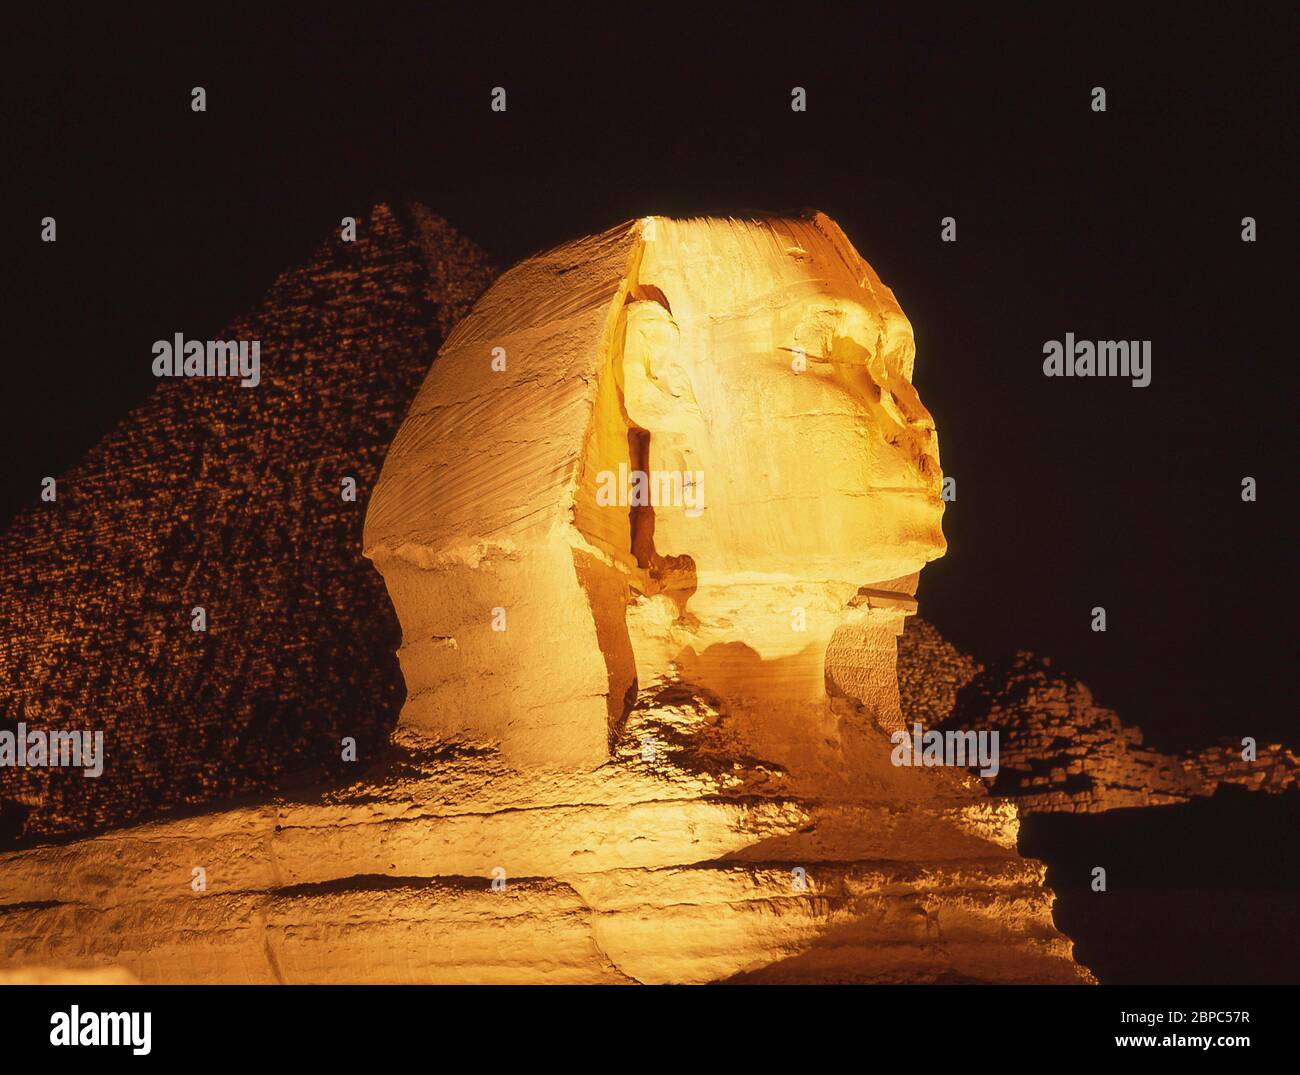 The Great Sphinx of Giza at night (son-et-lumiere), Giza, Giza Governate, Republic of Egypt Stock Photo